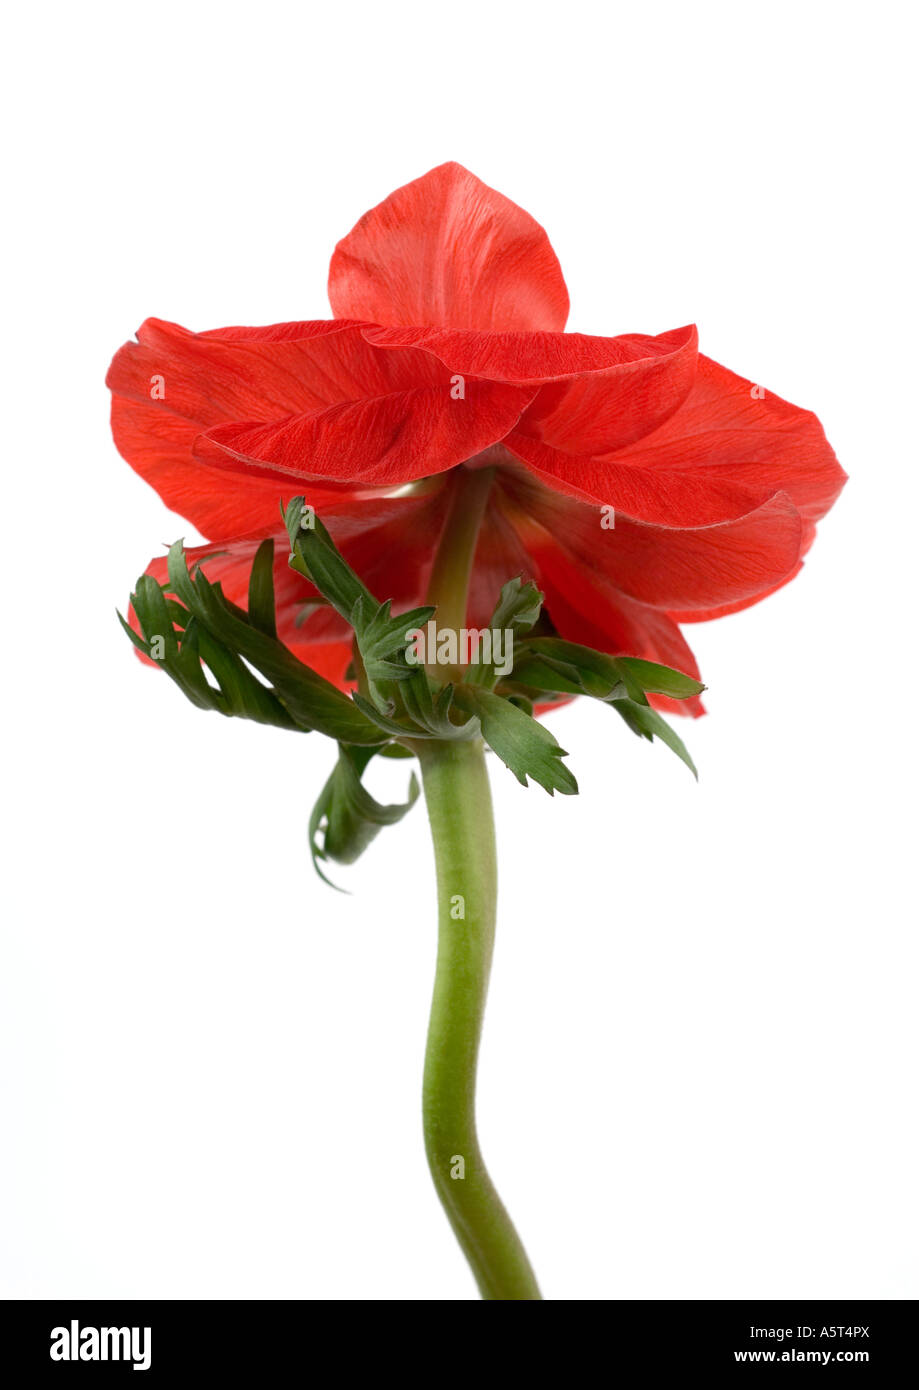 Anemone flower, close-up Stock Photo